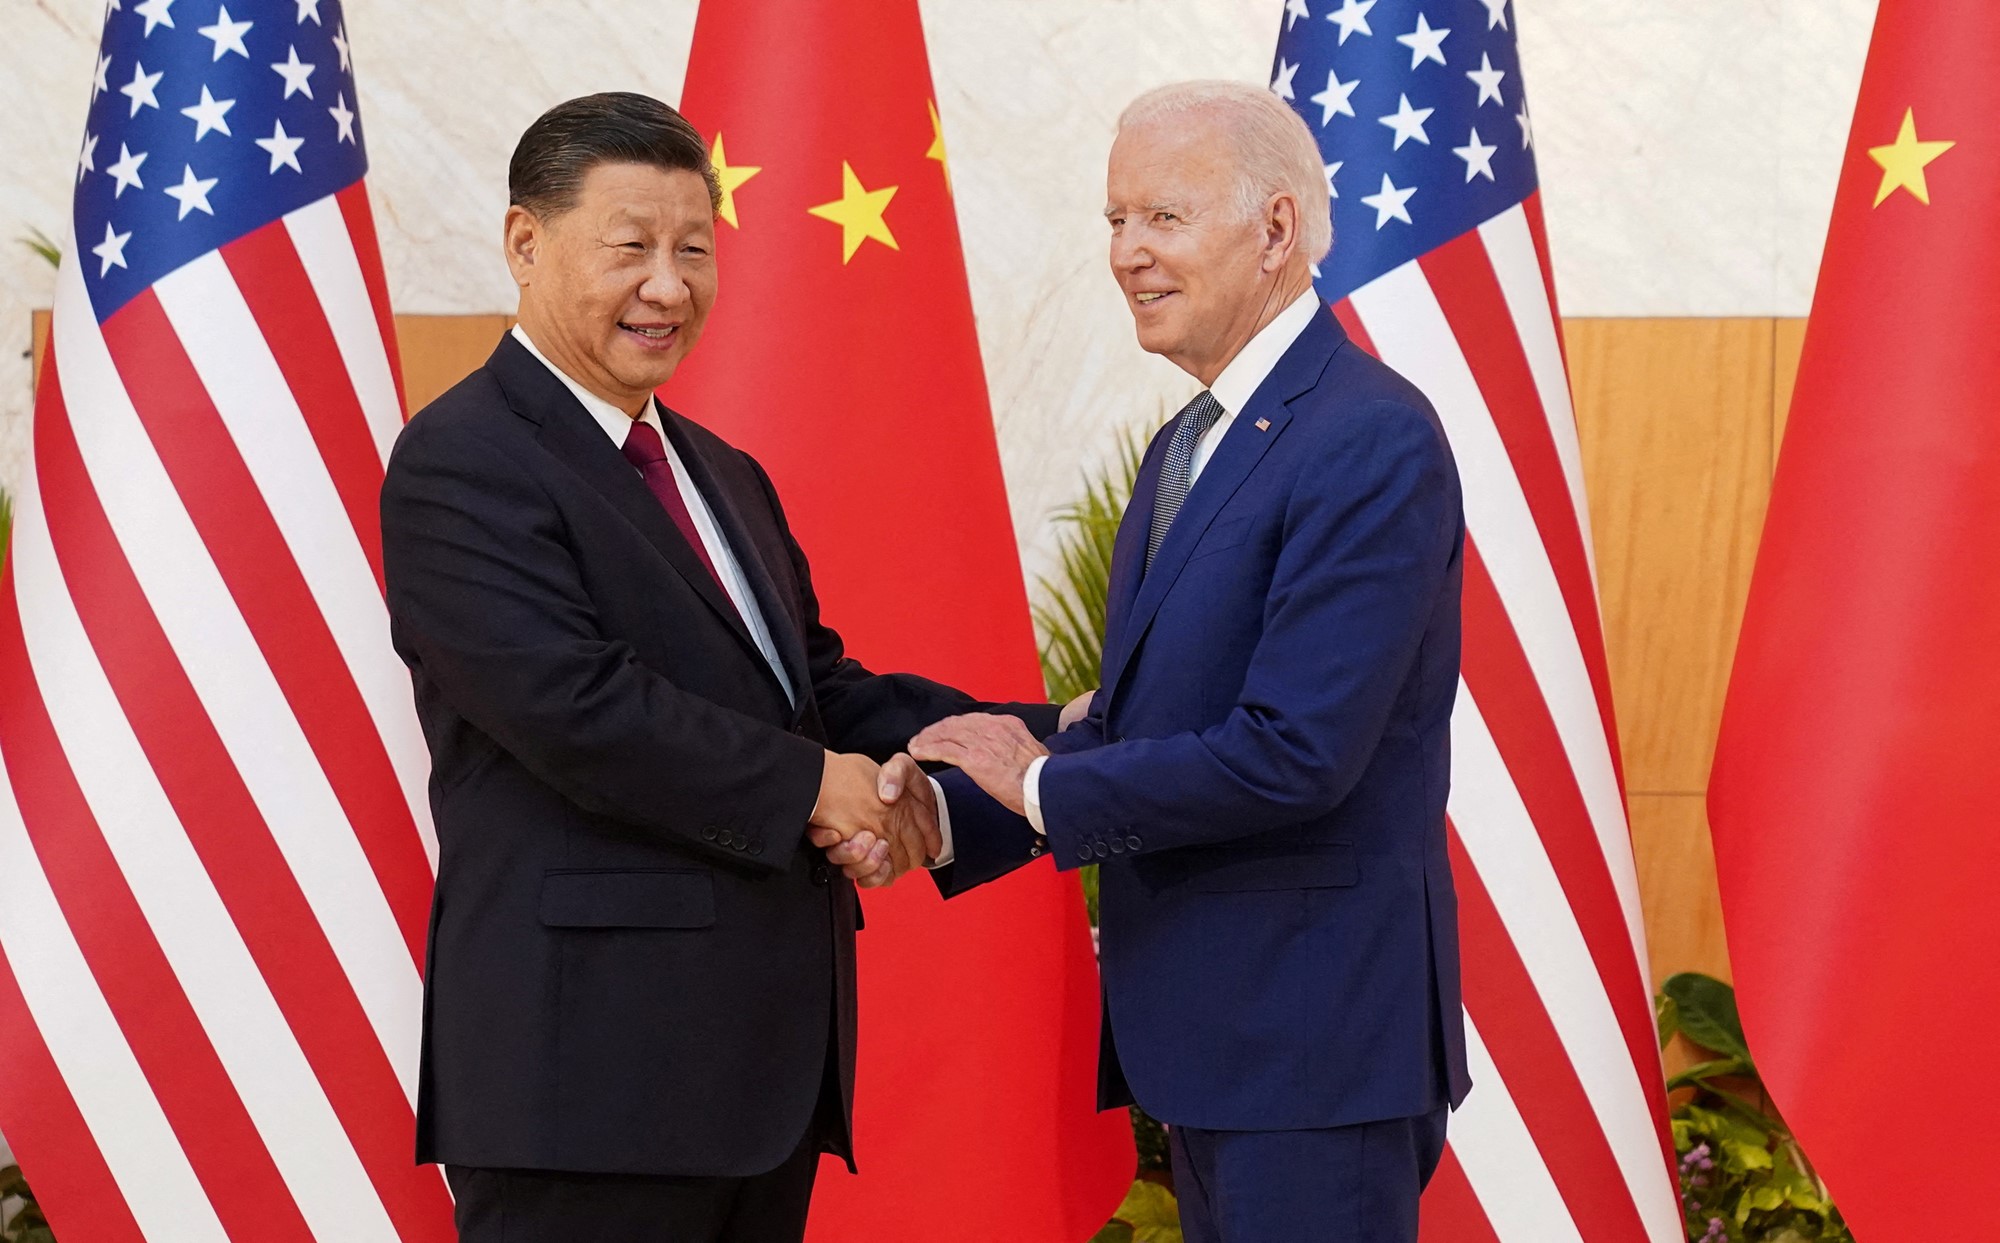 Xi and Biden shake hands.